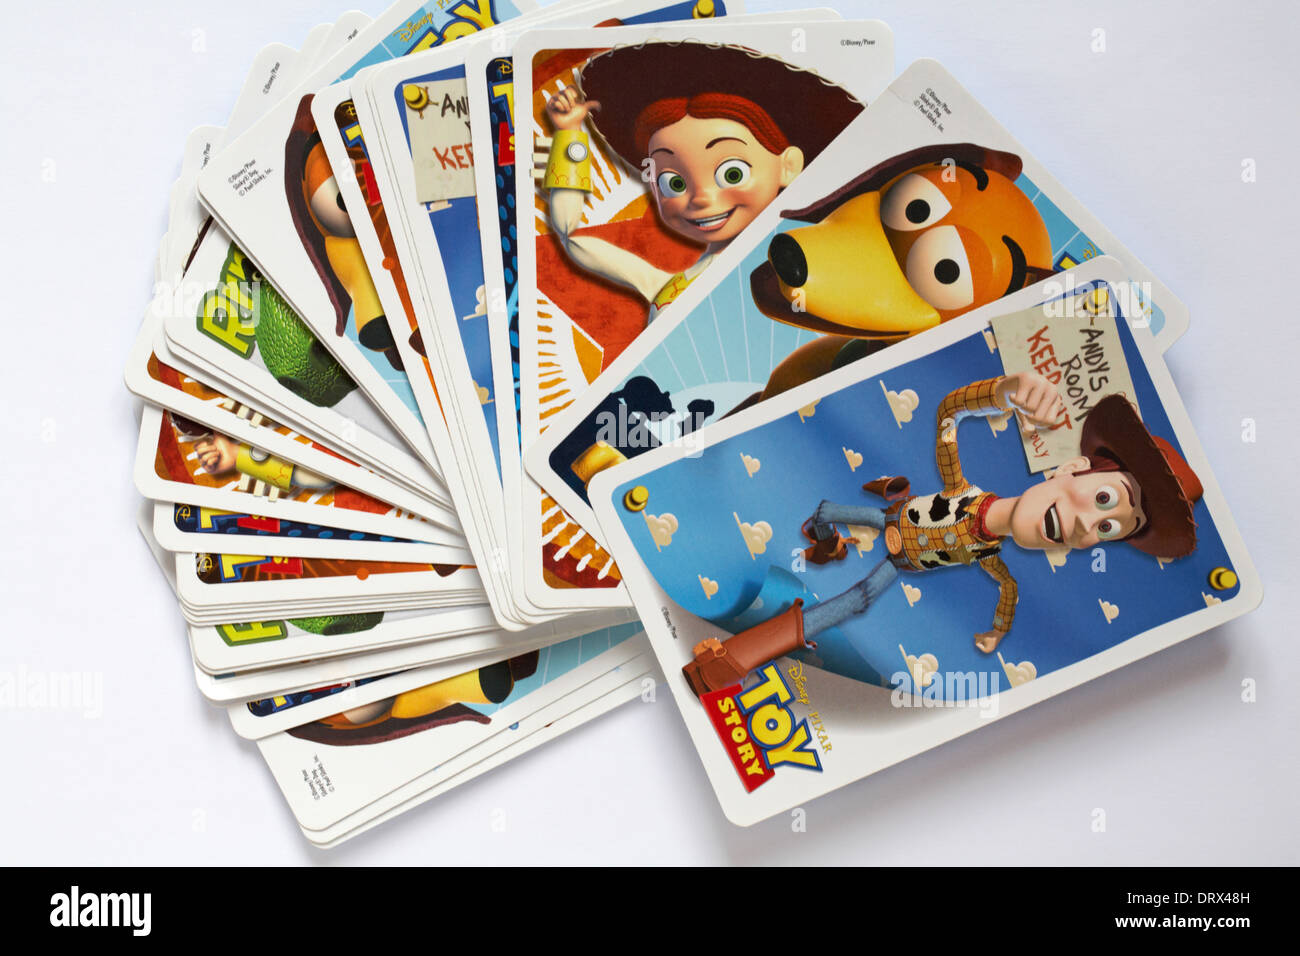 toy-story-cards-set-sur-fond-blanc-photo-stock-alamy